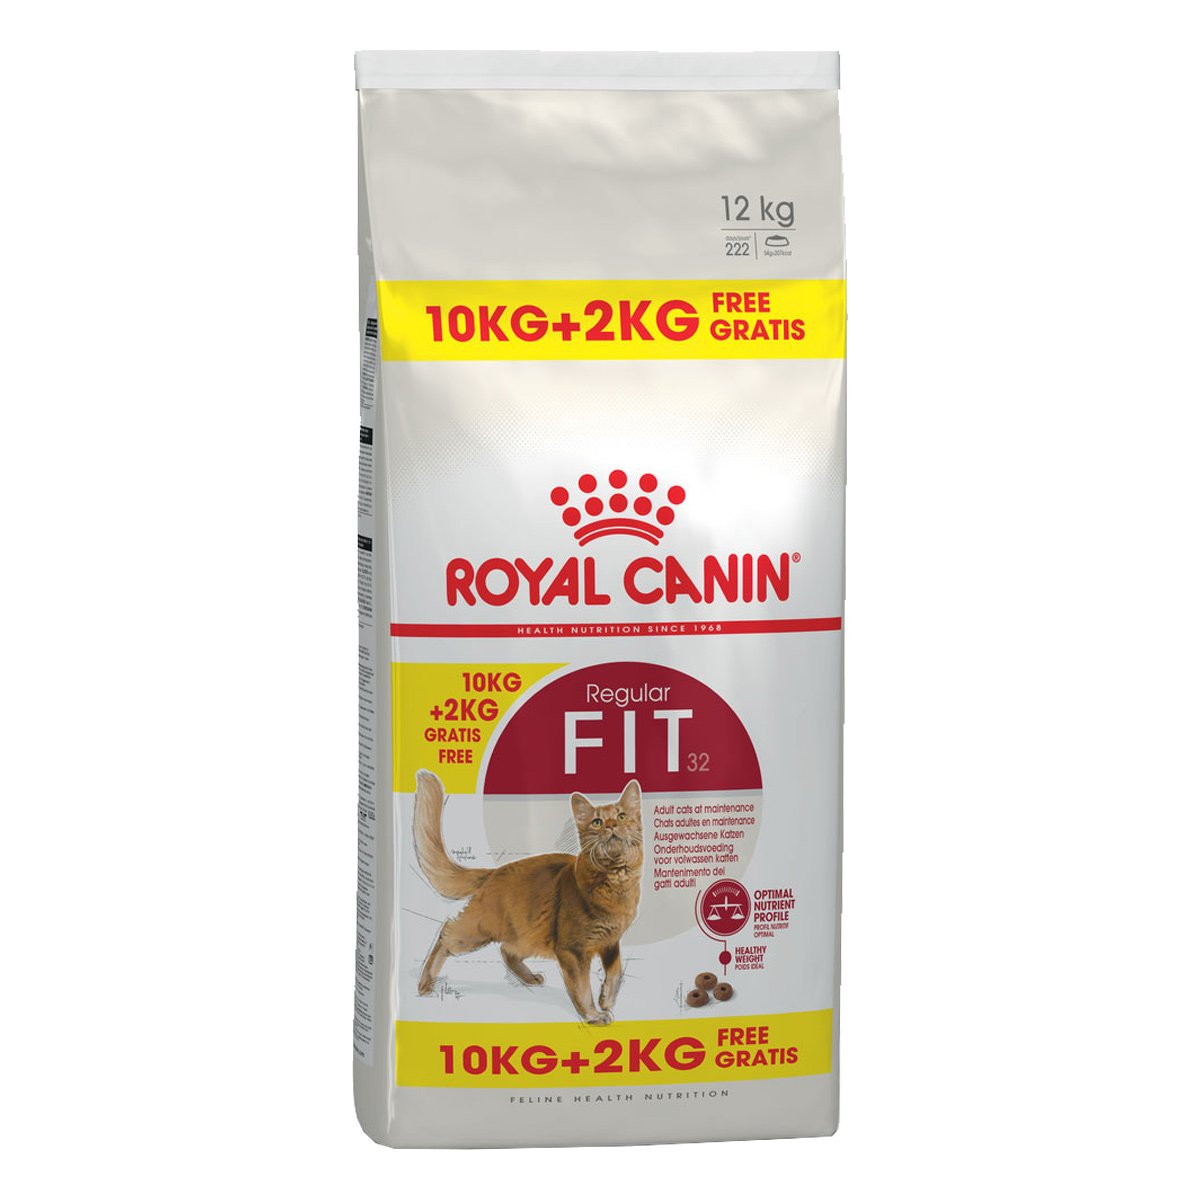 ROYAL CANIN FIT Trockenfutter für aktive Katzen 10kg+2kg gratis von Royal Canin